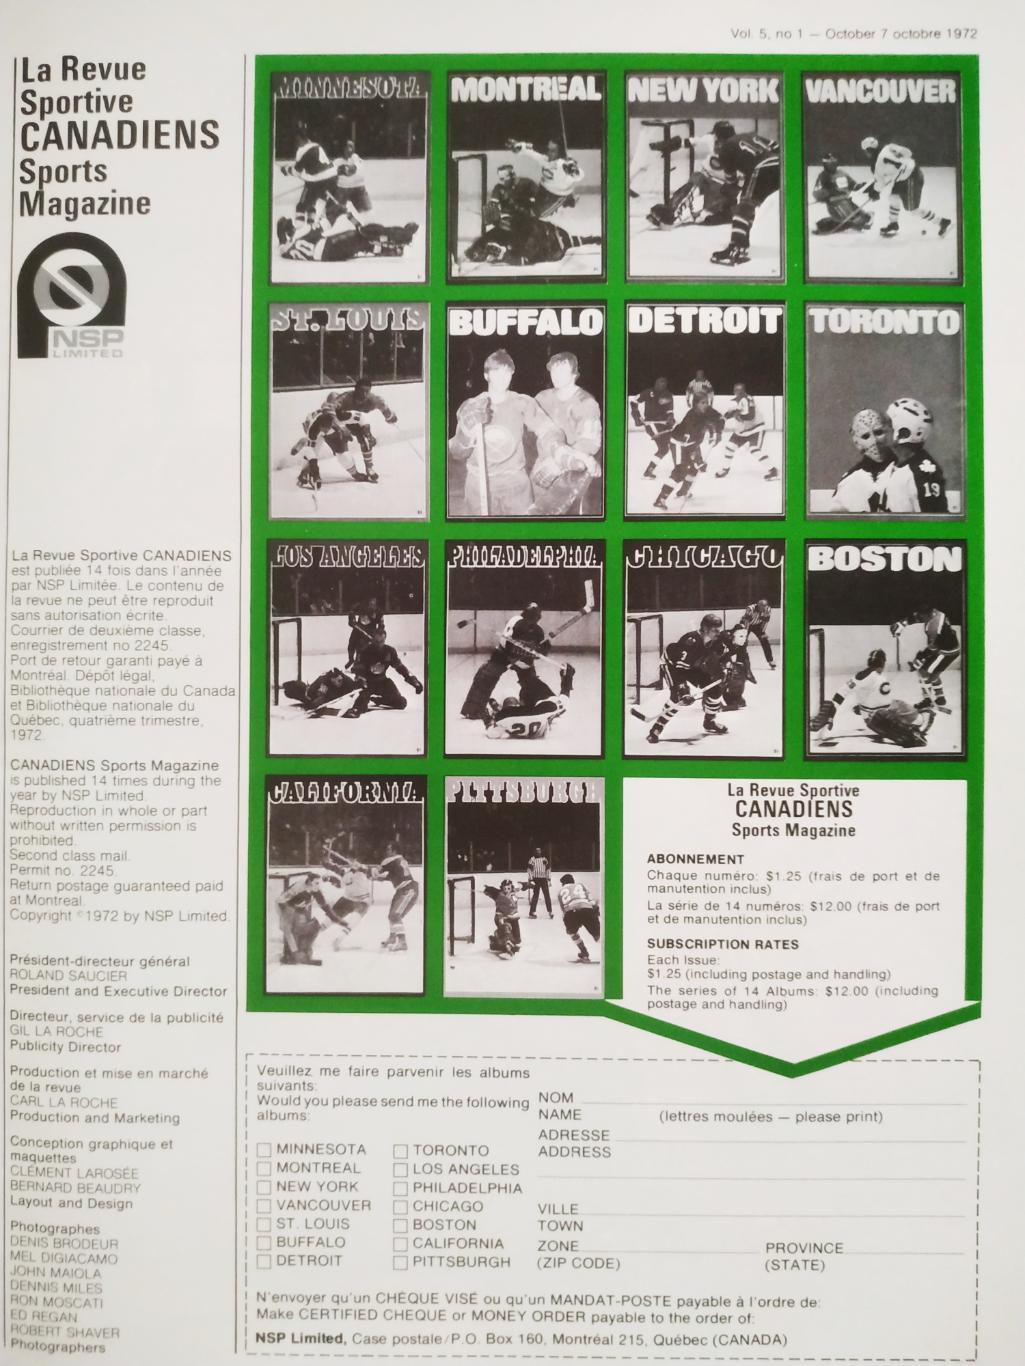 ХОККЕЙ ПРОГРАММА МАТЧА НХЛ NHL 1972 OCT.7 MINNESOTA VS. MONTREAL PROGRAM GAME 1